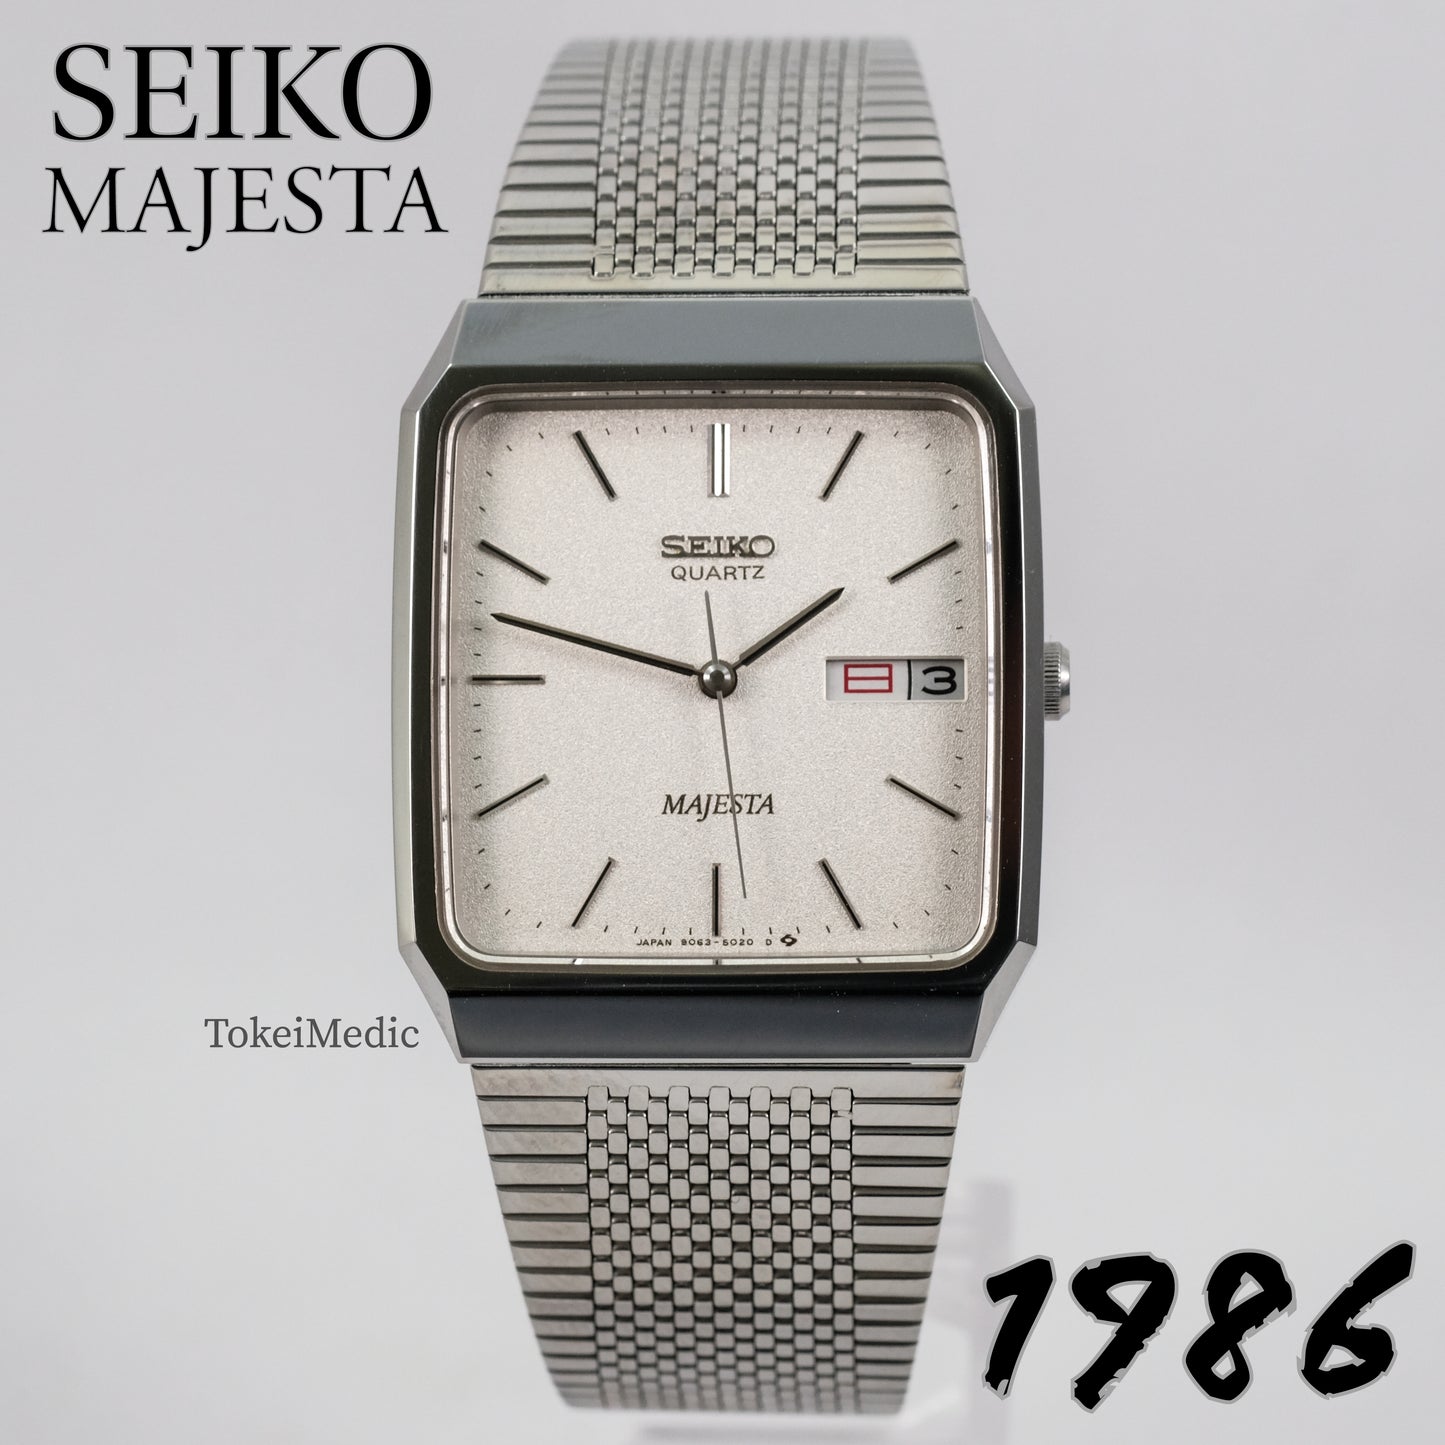 1986 Seiko Majesta 9063-5020